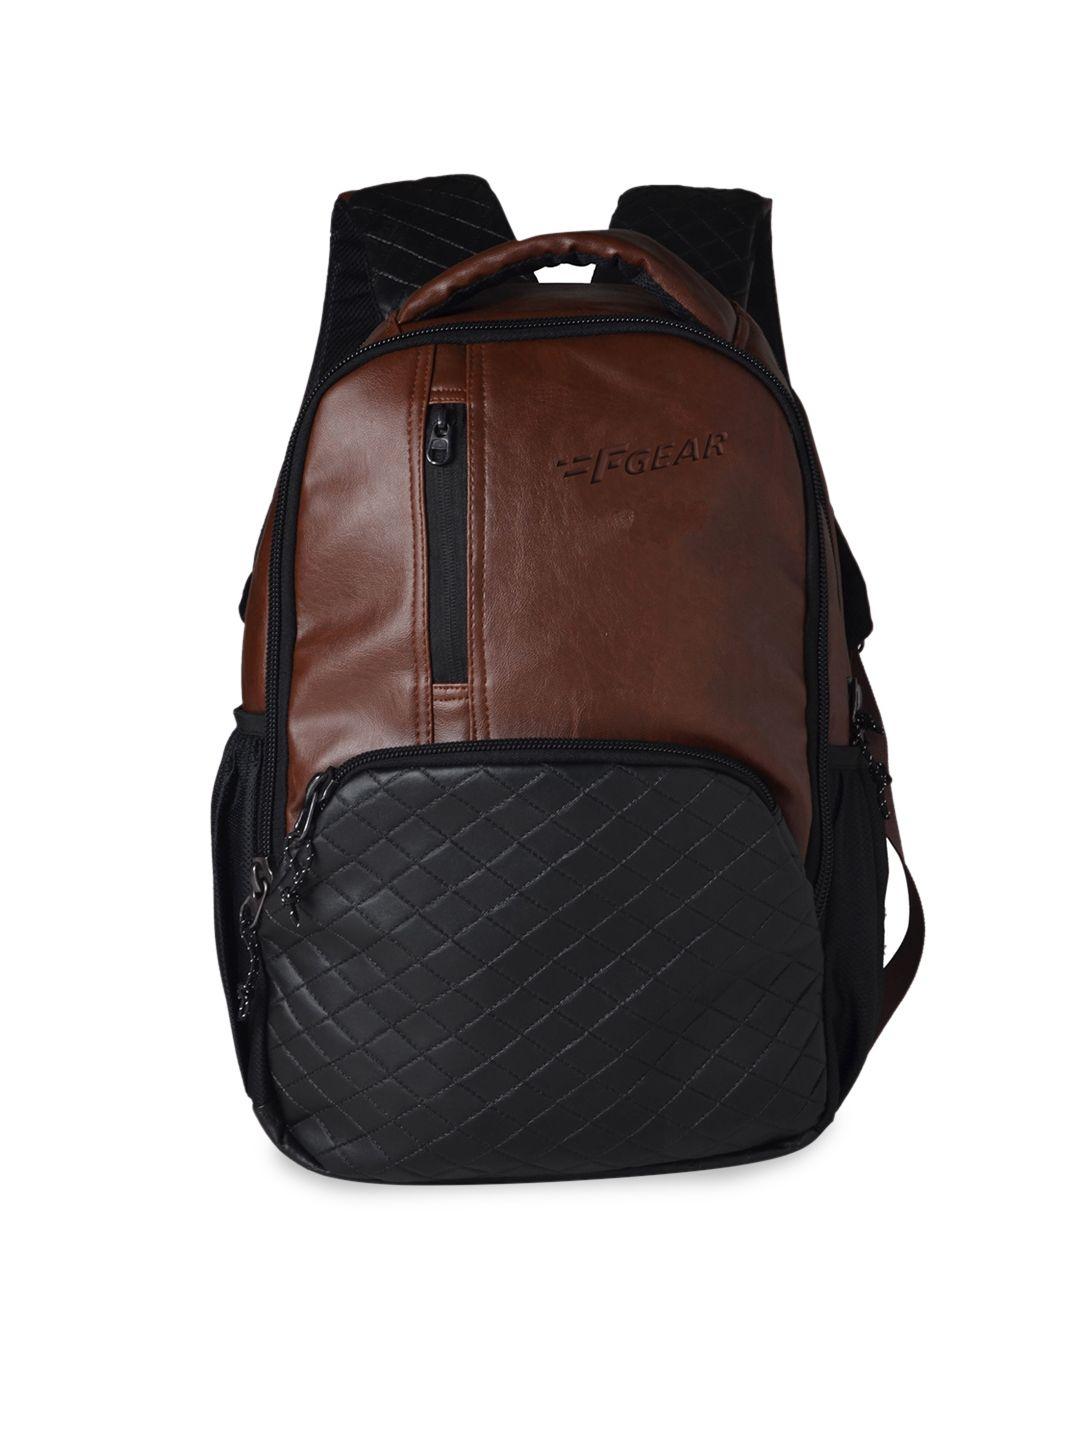 f gear unisex brown & black colourblocked backpack